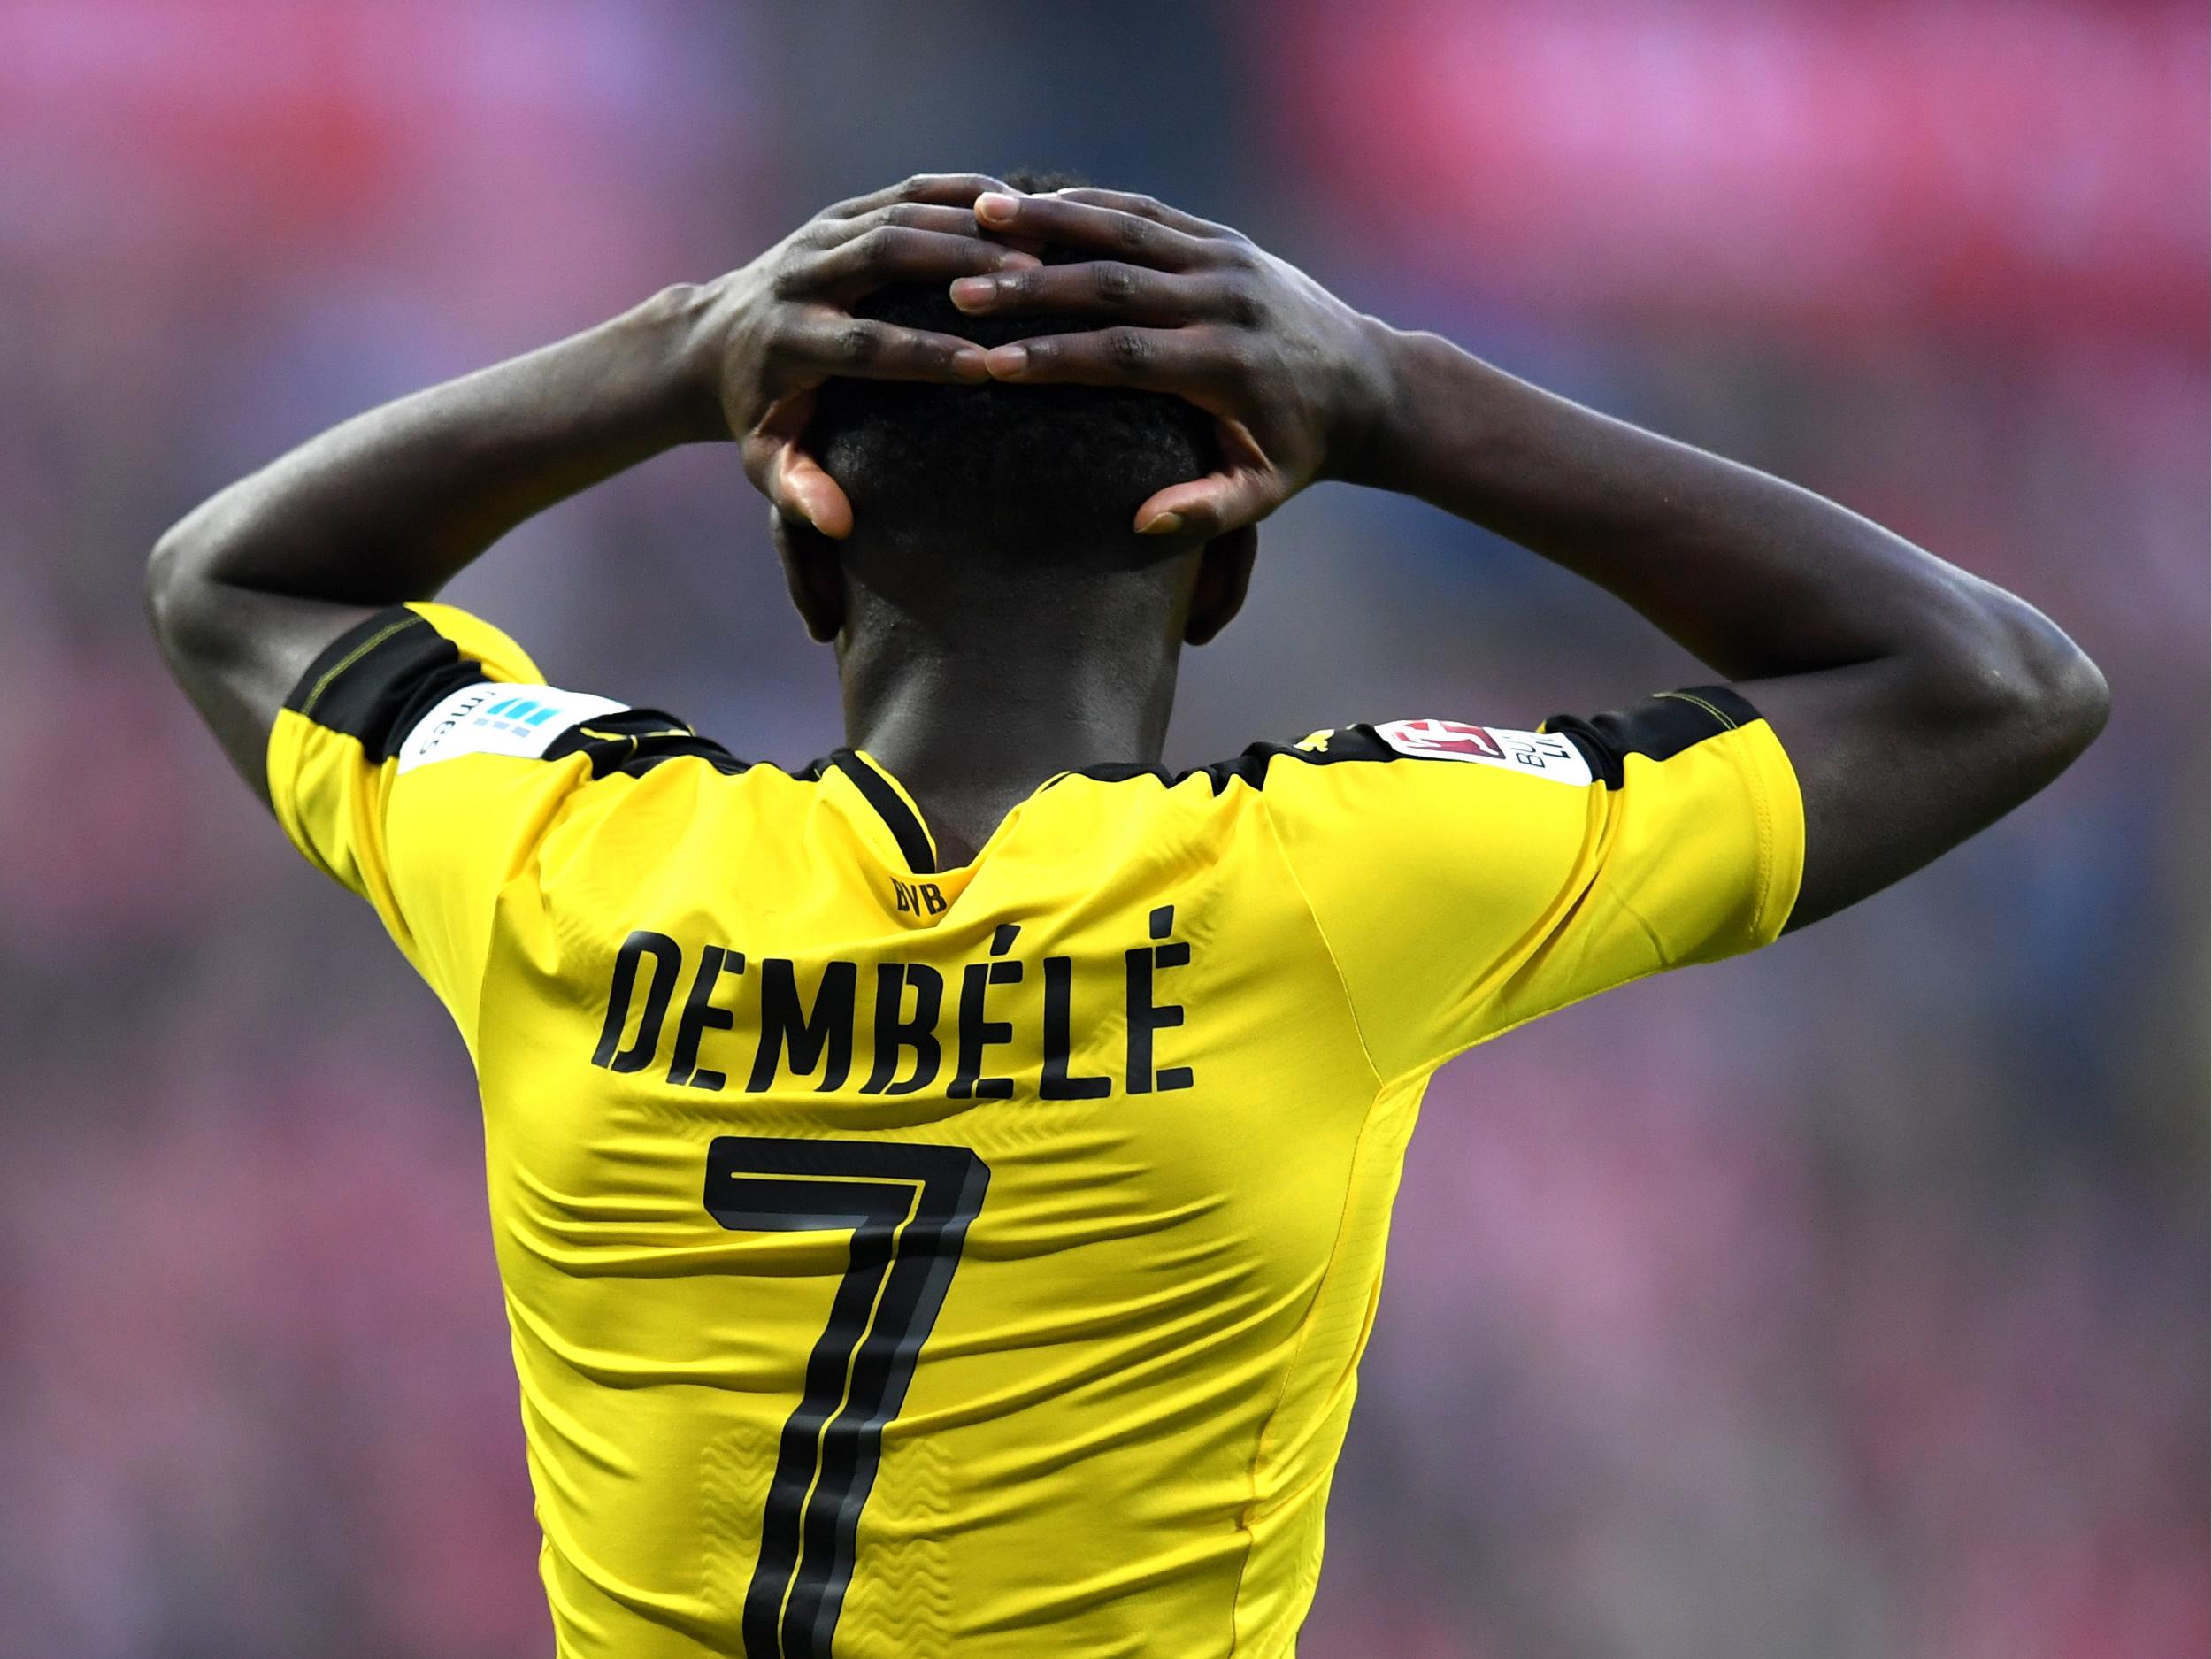 Ousmane Dembele scored 10 goals and created 21 assists for Dortmund last season